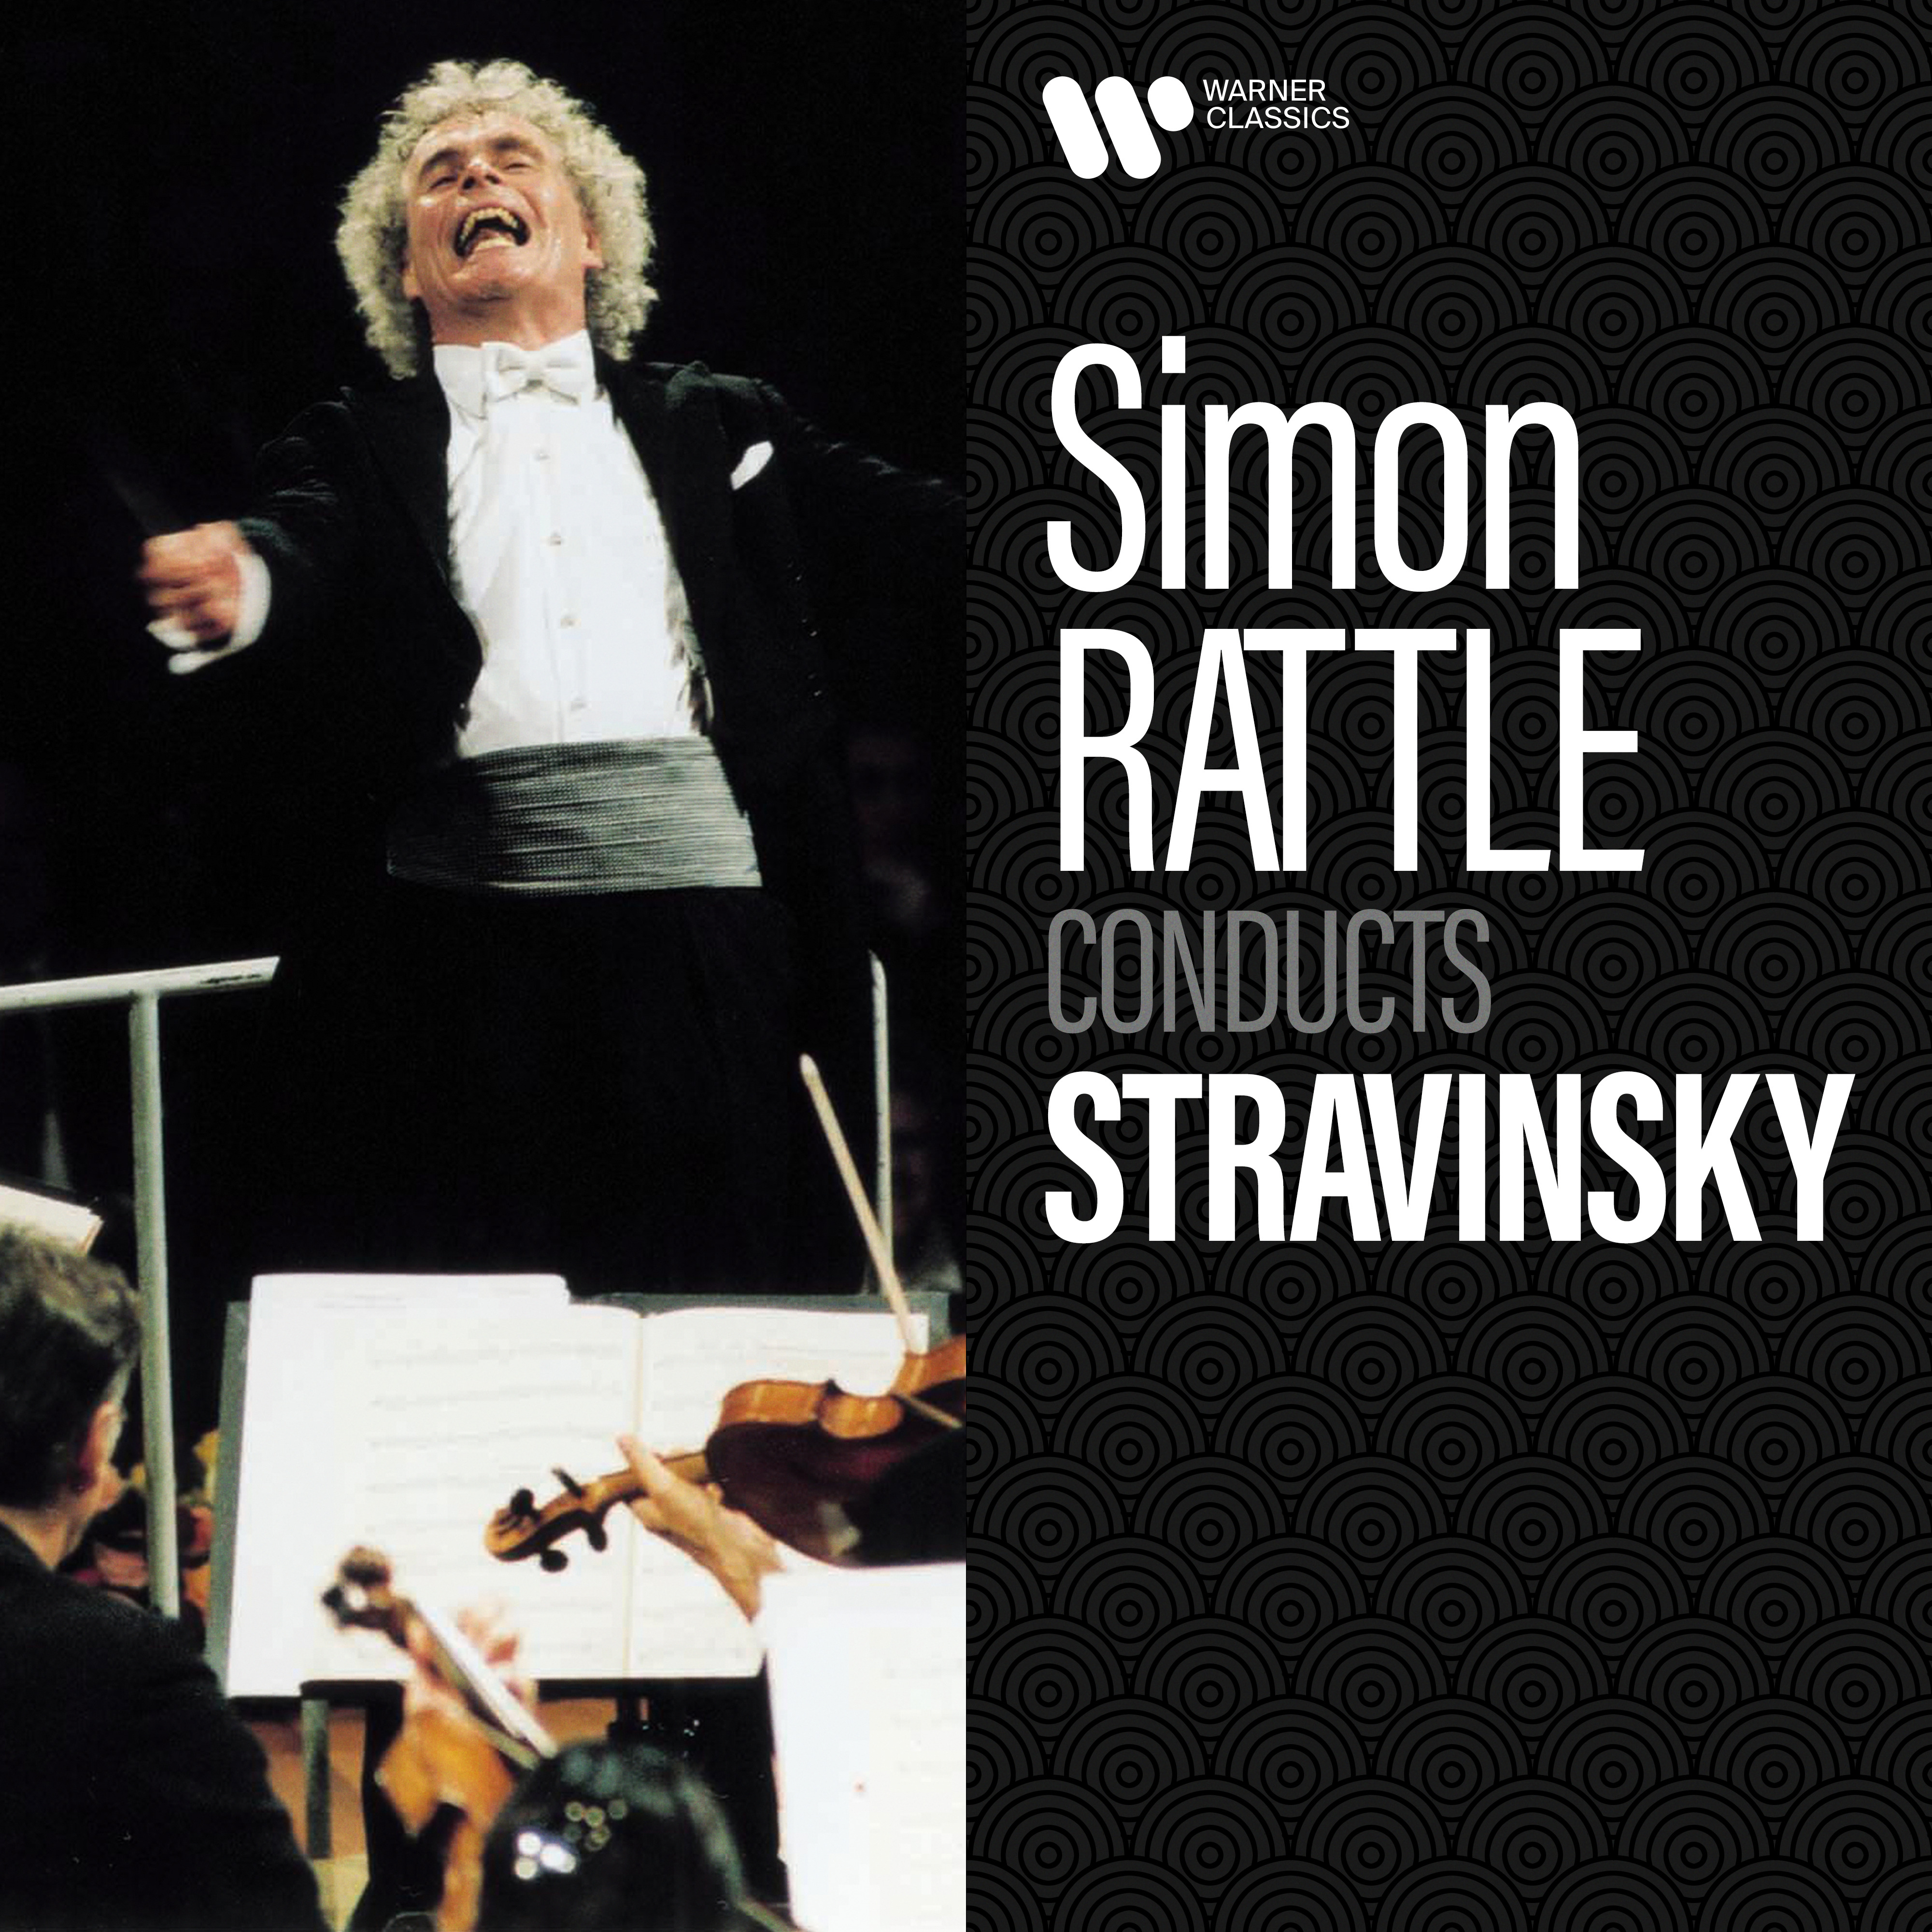 Simon Rattle Conducts Stravinsky | Warner Classics